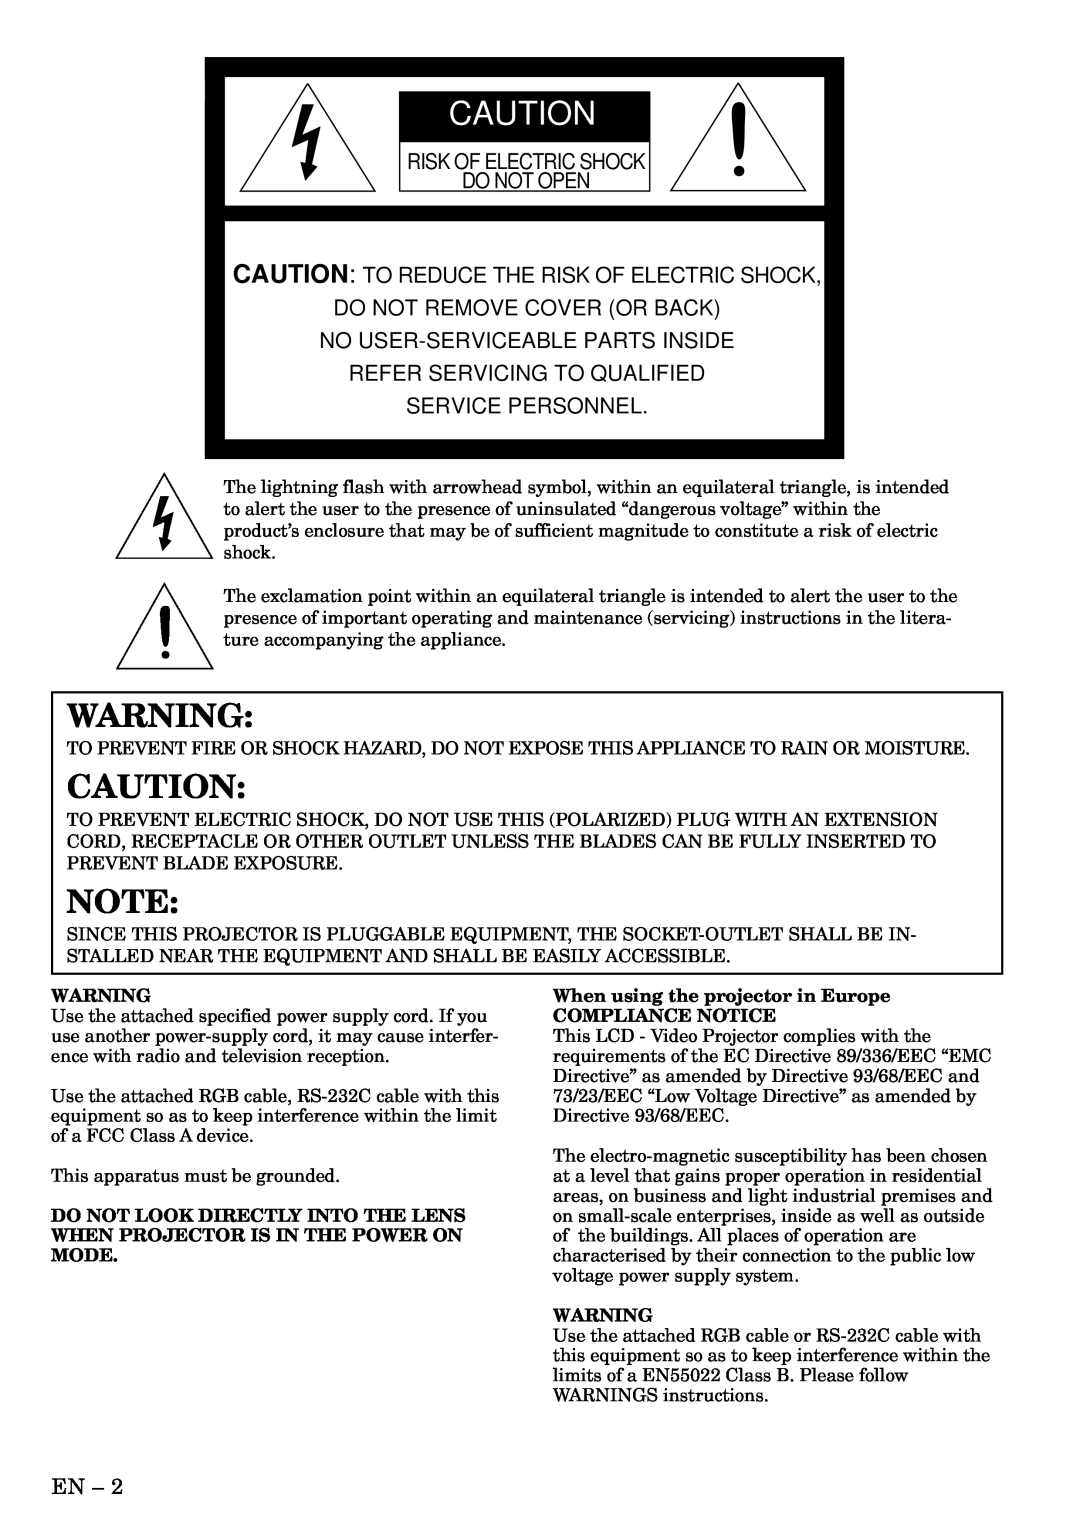 Mitsubishi Electronics X500U user manual Risk Of Electric Shock Do Not Open, Caution To Reduce The Risk Of Electric Shock 